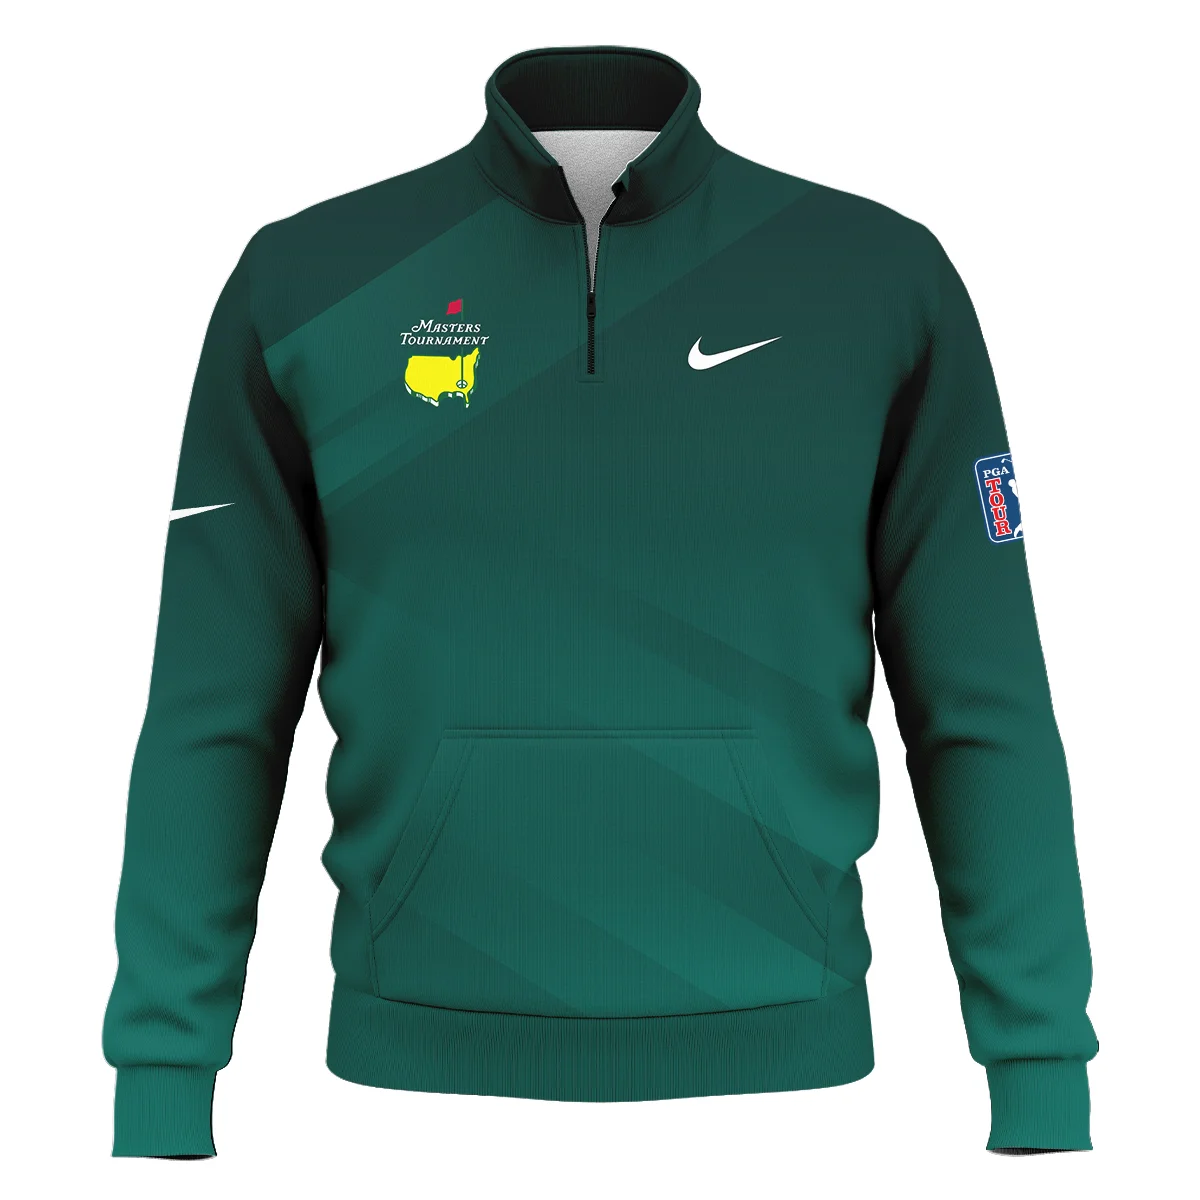 Masters Tournament Dark Green Gradient Golf Sport Nike Polo Shirt Style Classic Polo Shirt For Men